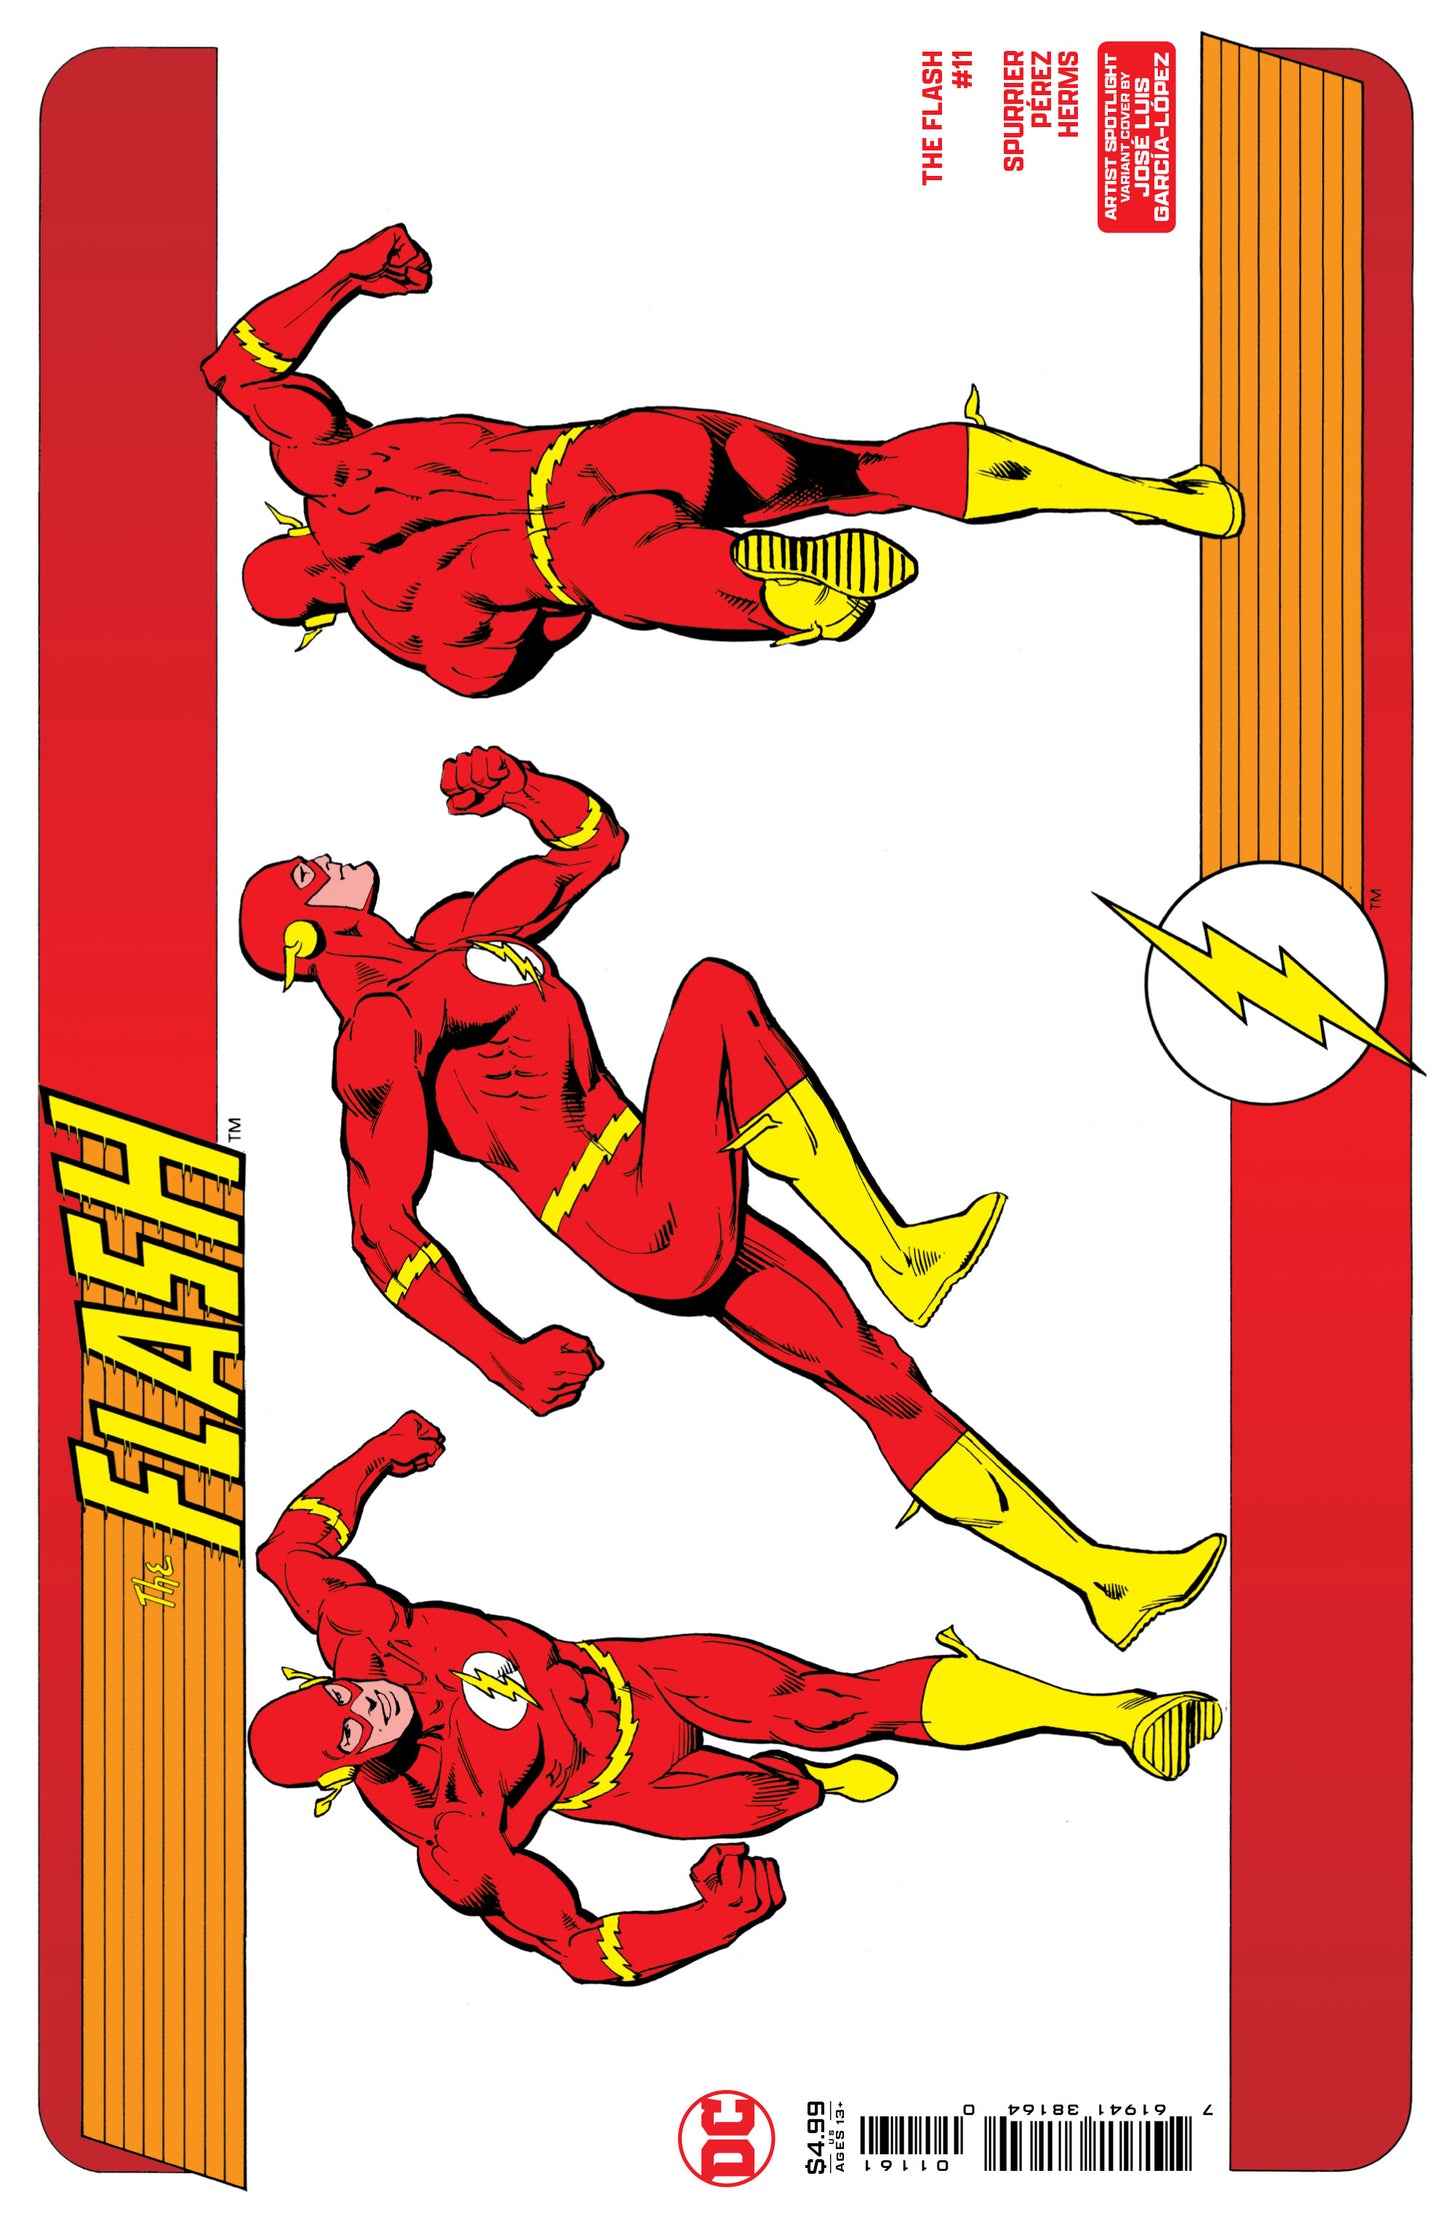 FLASH #11 CVR D JOSE LUIS GARCIA-LOPEZ ARTIST SPOTLIGHT WRAPAROUND CARD STOCK VAR - End Of The Earth Comics